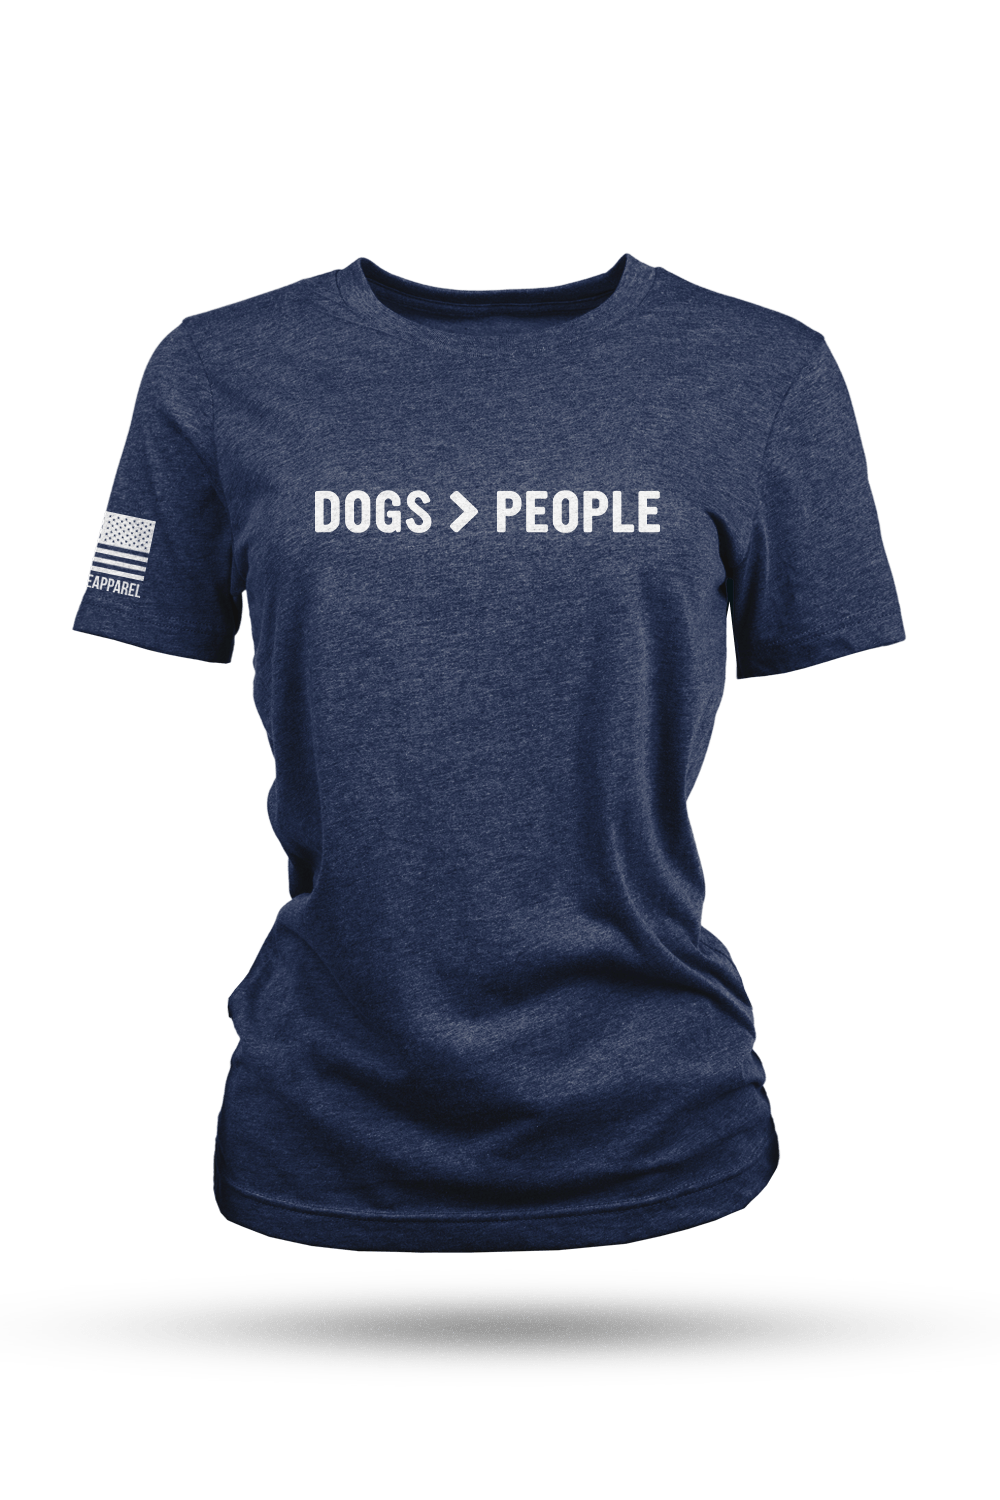 Women's Tri-Blend T-Shirt - Dogs>People - Nine Line Apparel